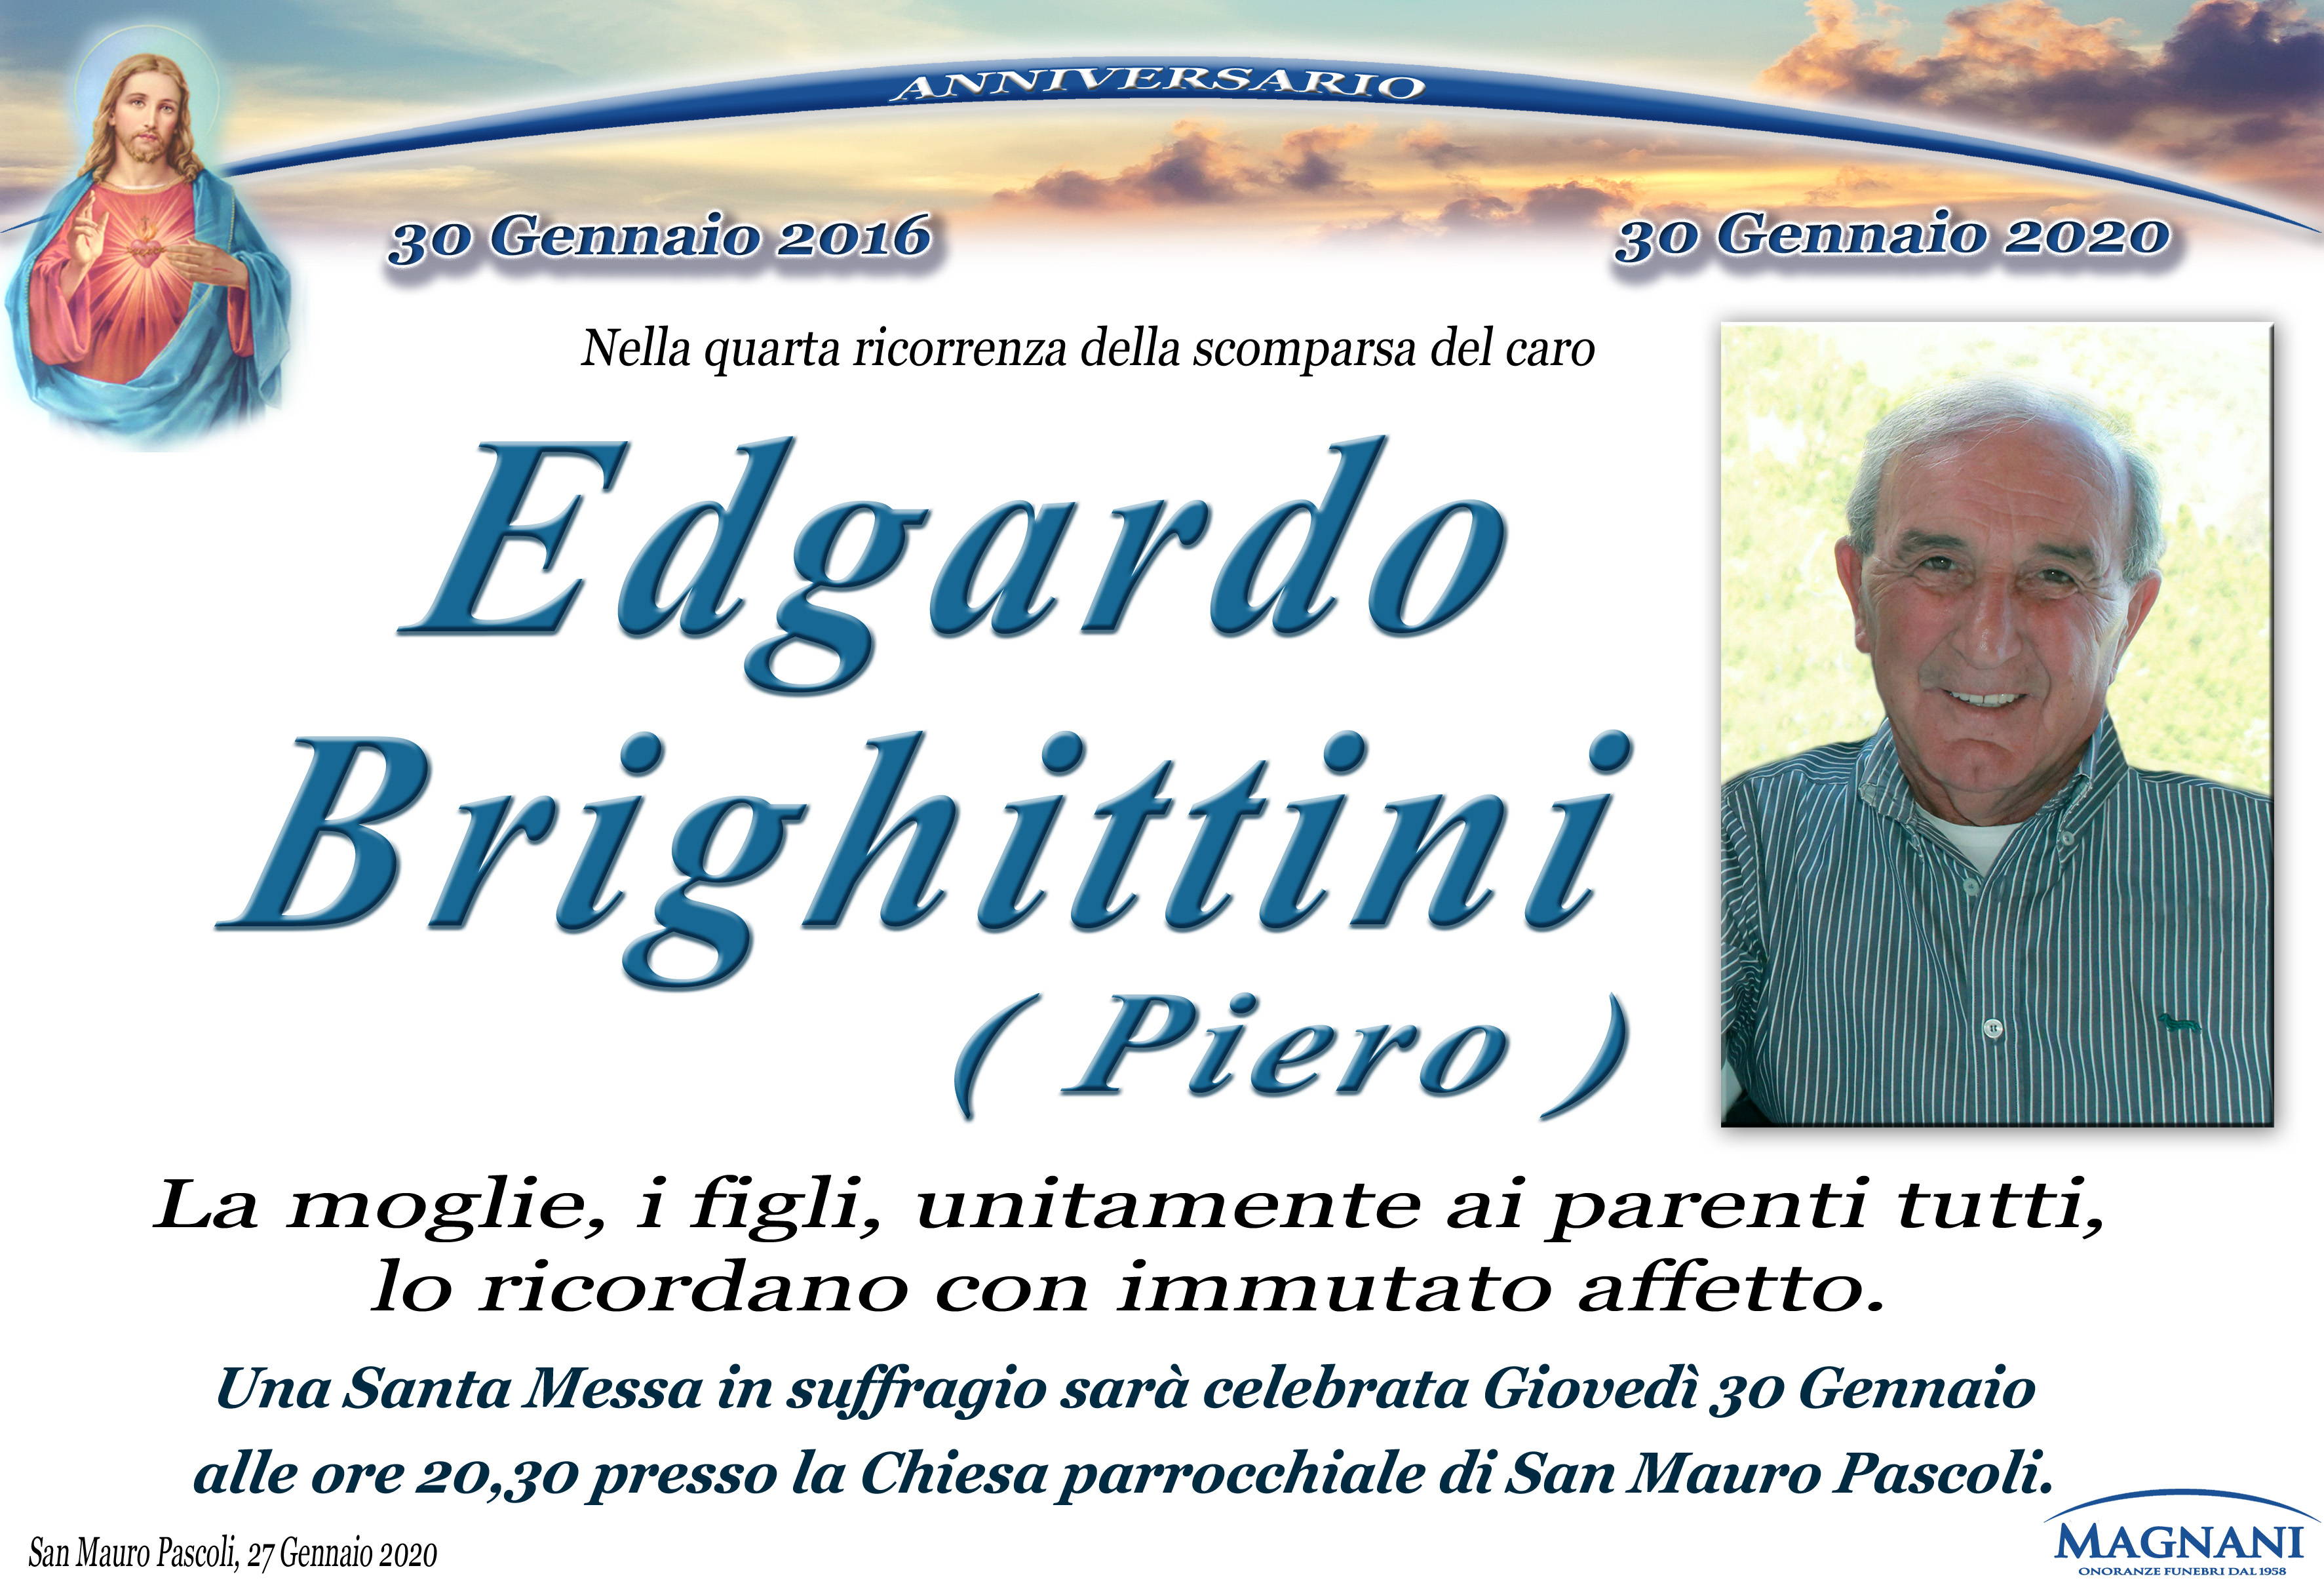 Edgardo Brighittini